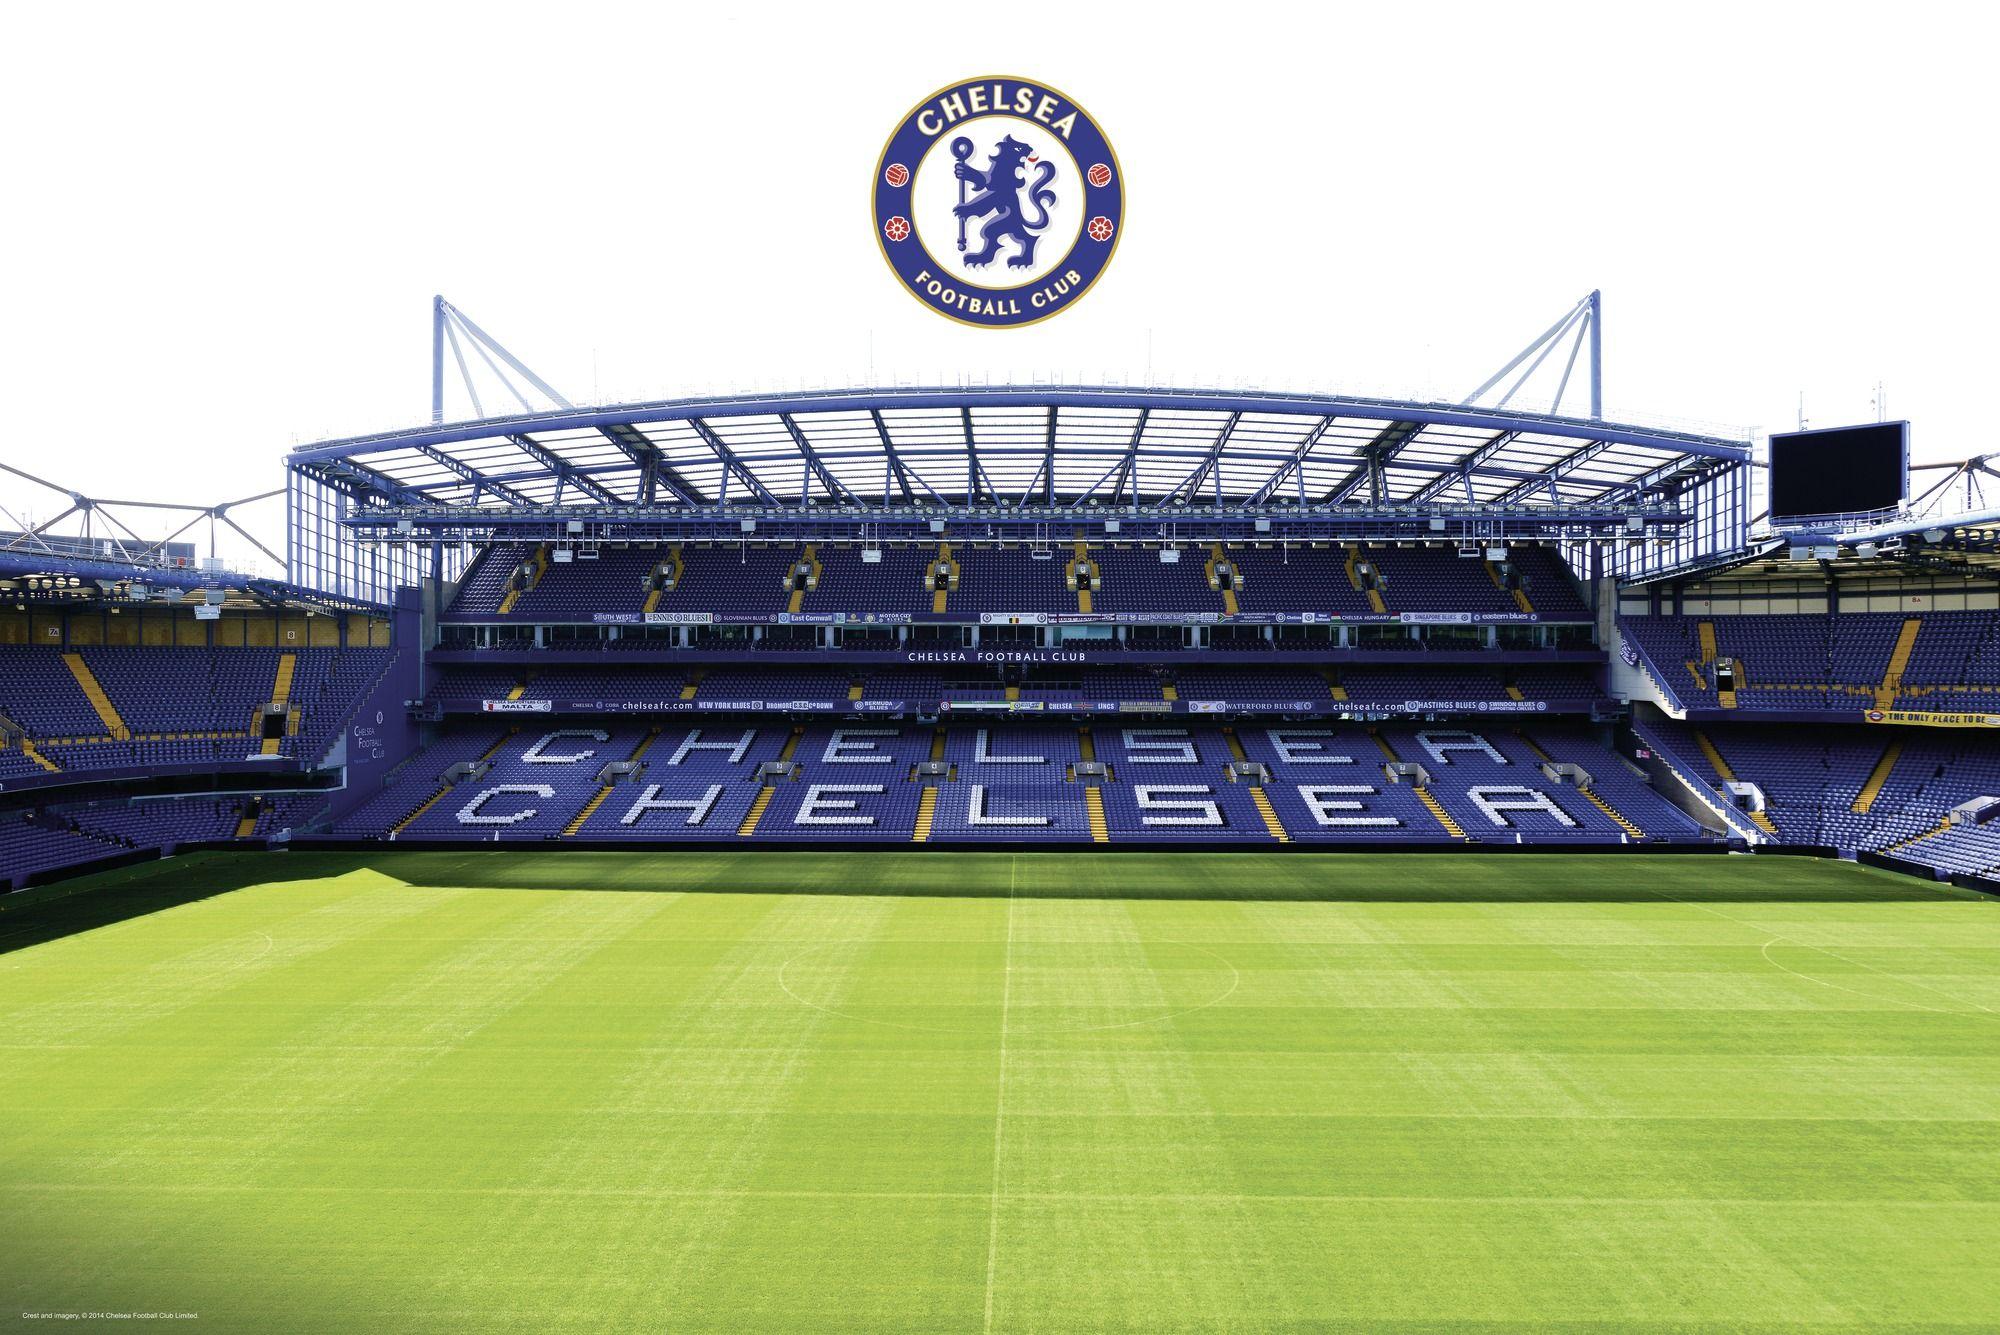 Stamford Bridge Football Stadium for Chelsea Club Editorial Photo